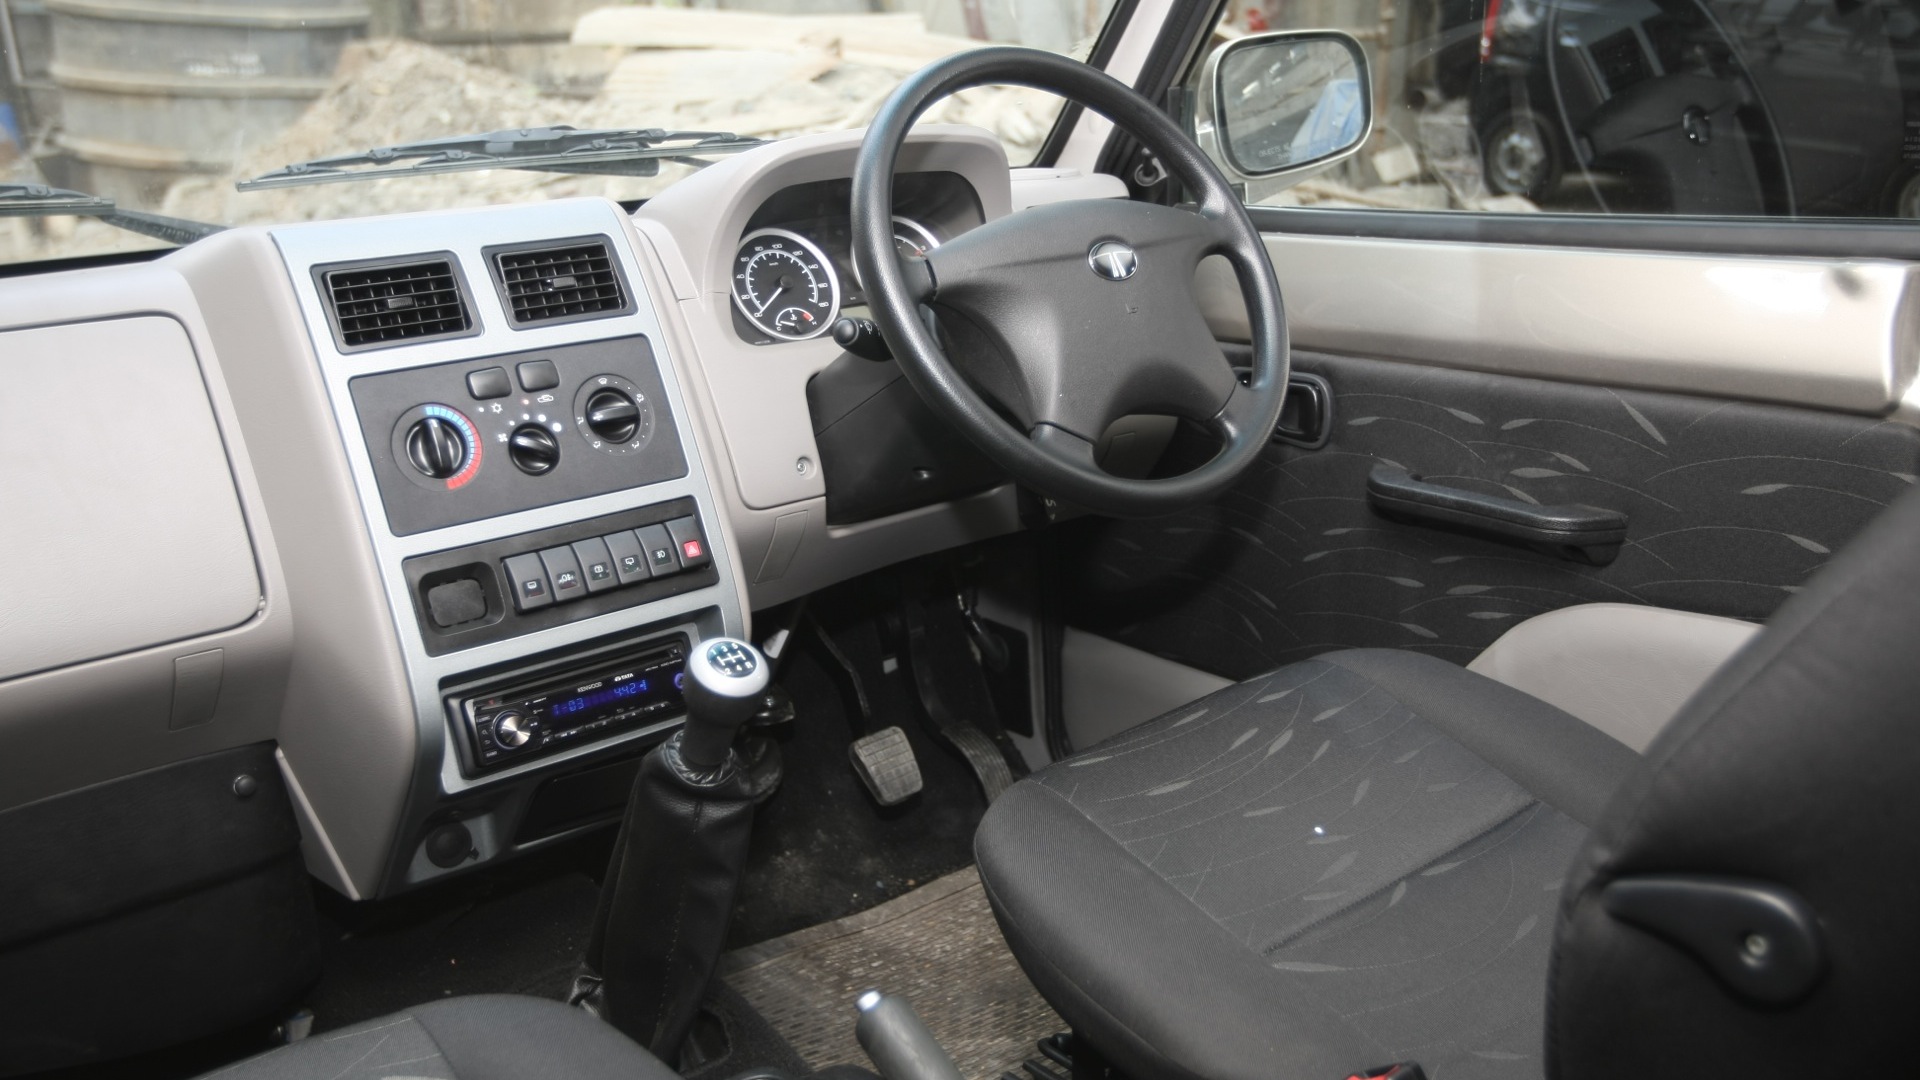 Tata Sumo Gold 2012 Gx Interior Car Photos Overdrive